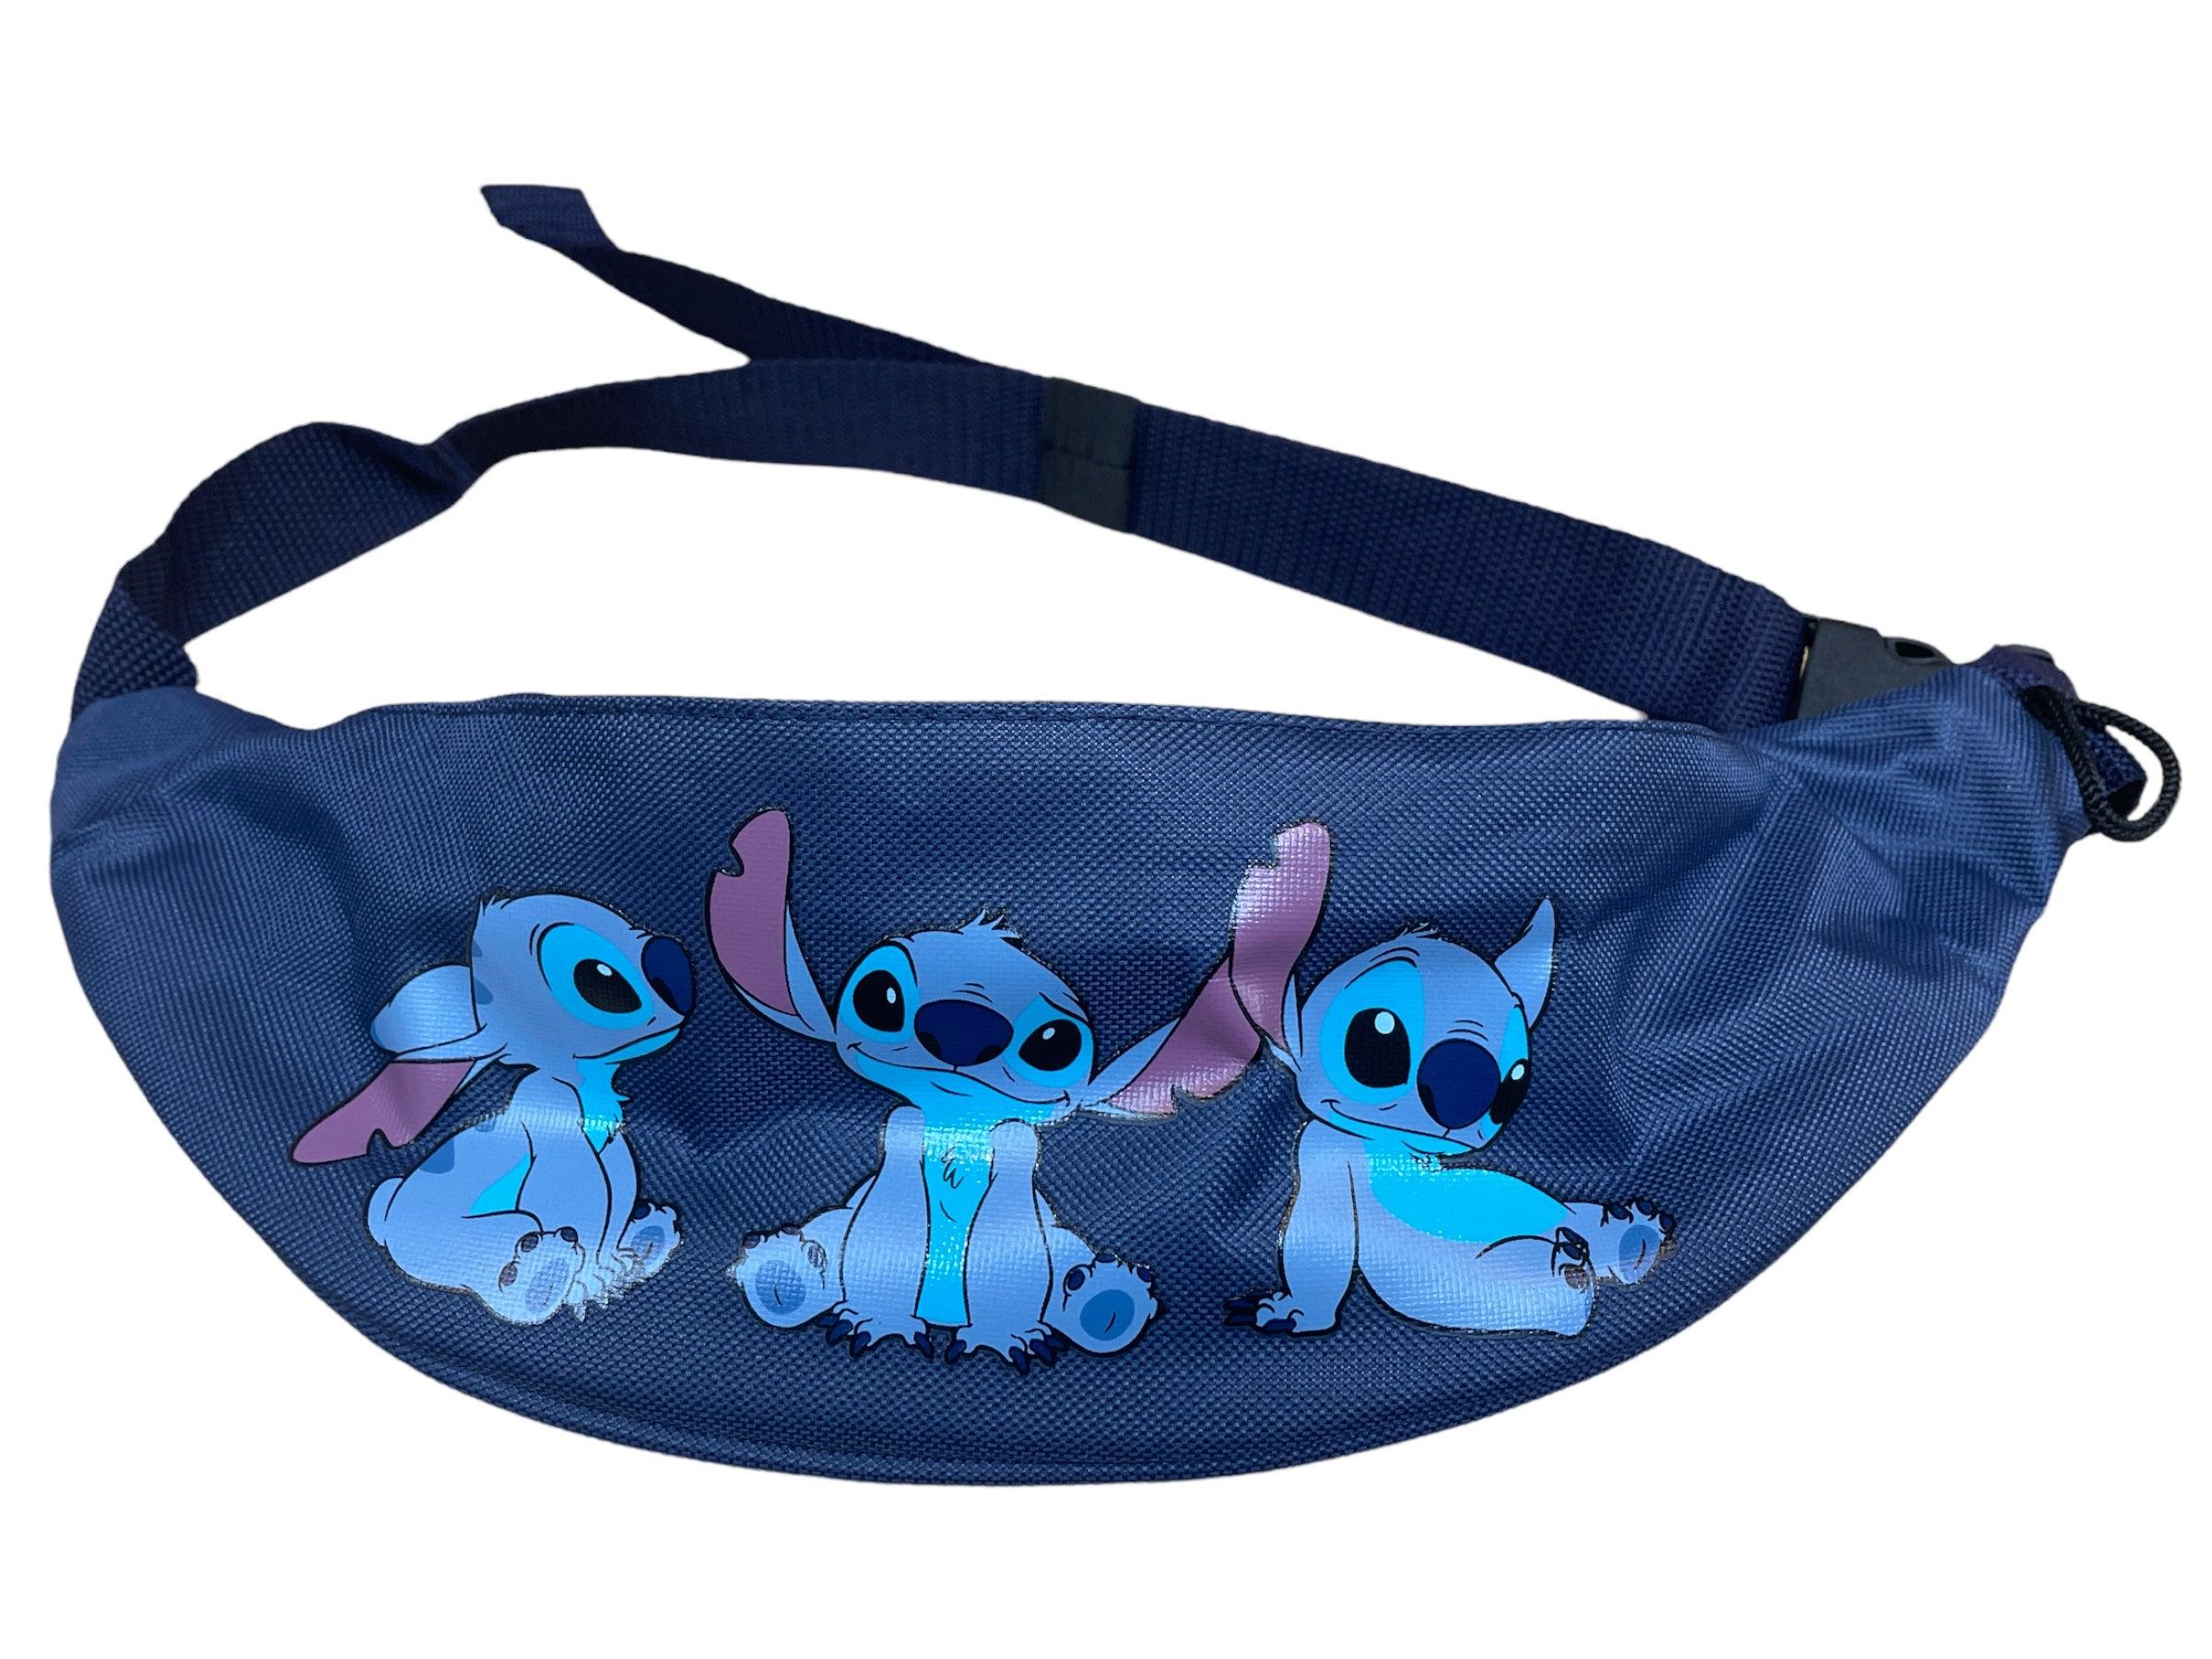 Disney Stitch Rainbow Round Crossbody Bag